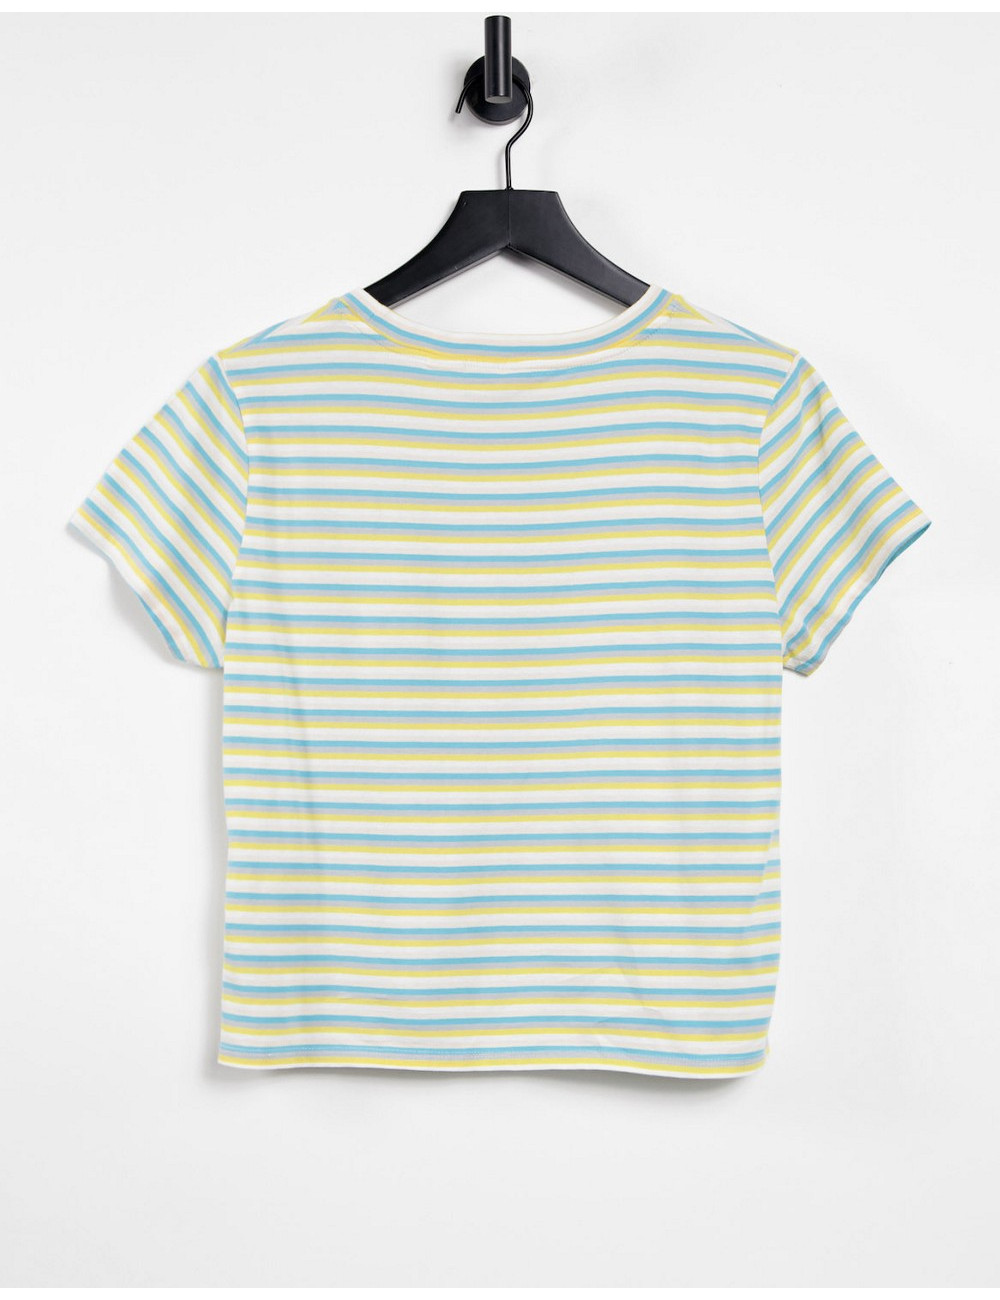 Levi's surf t-shirt in stripe